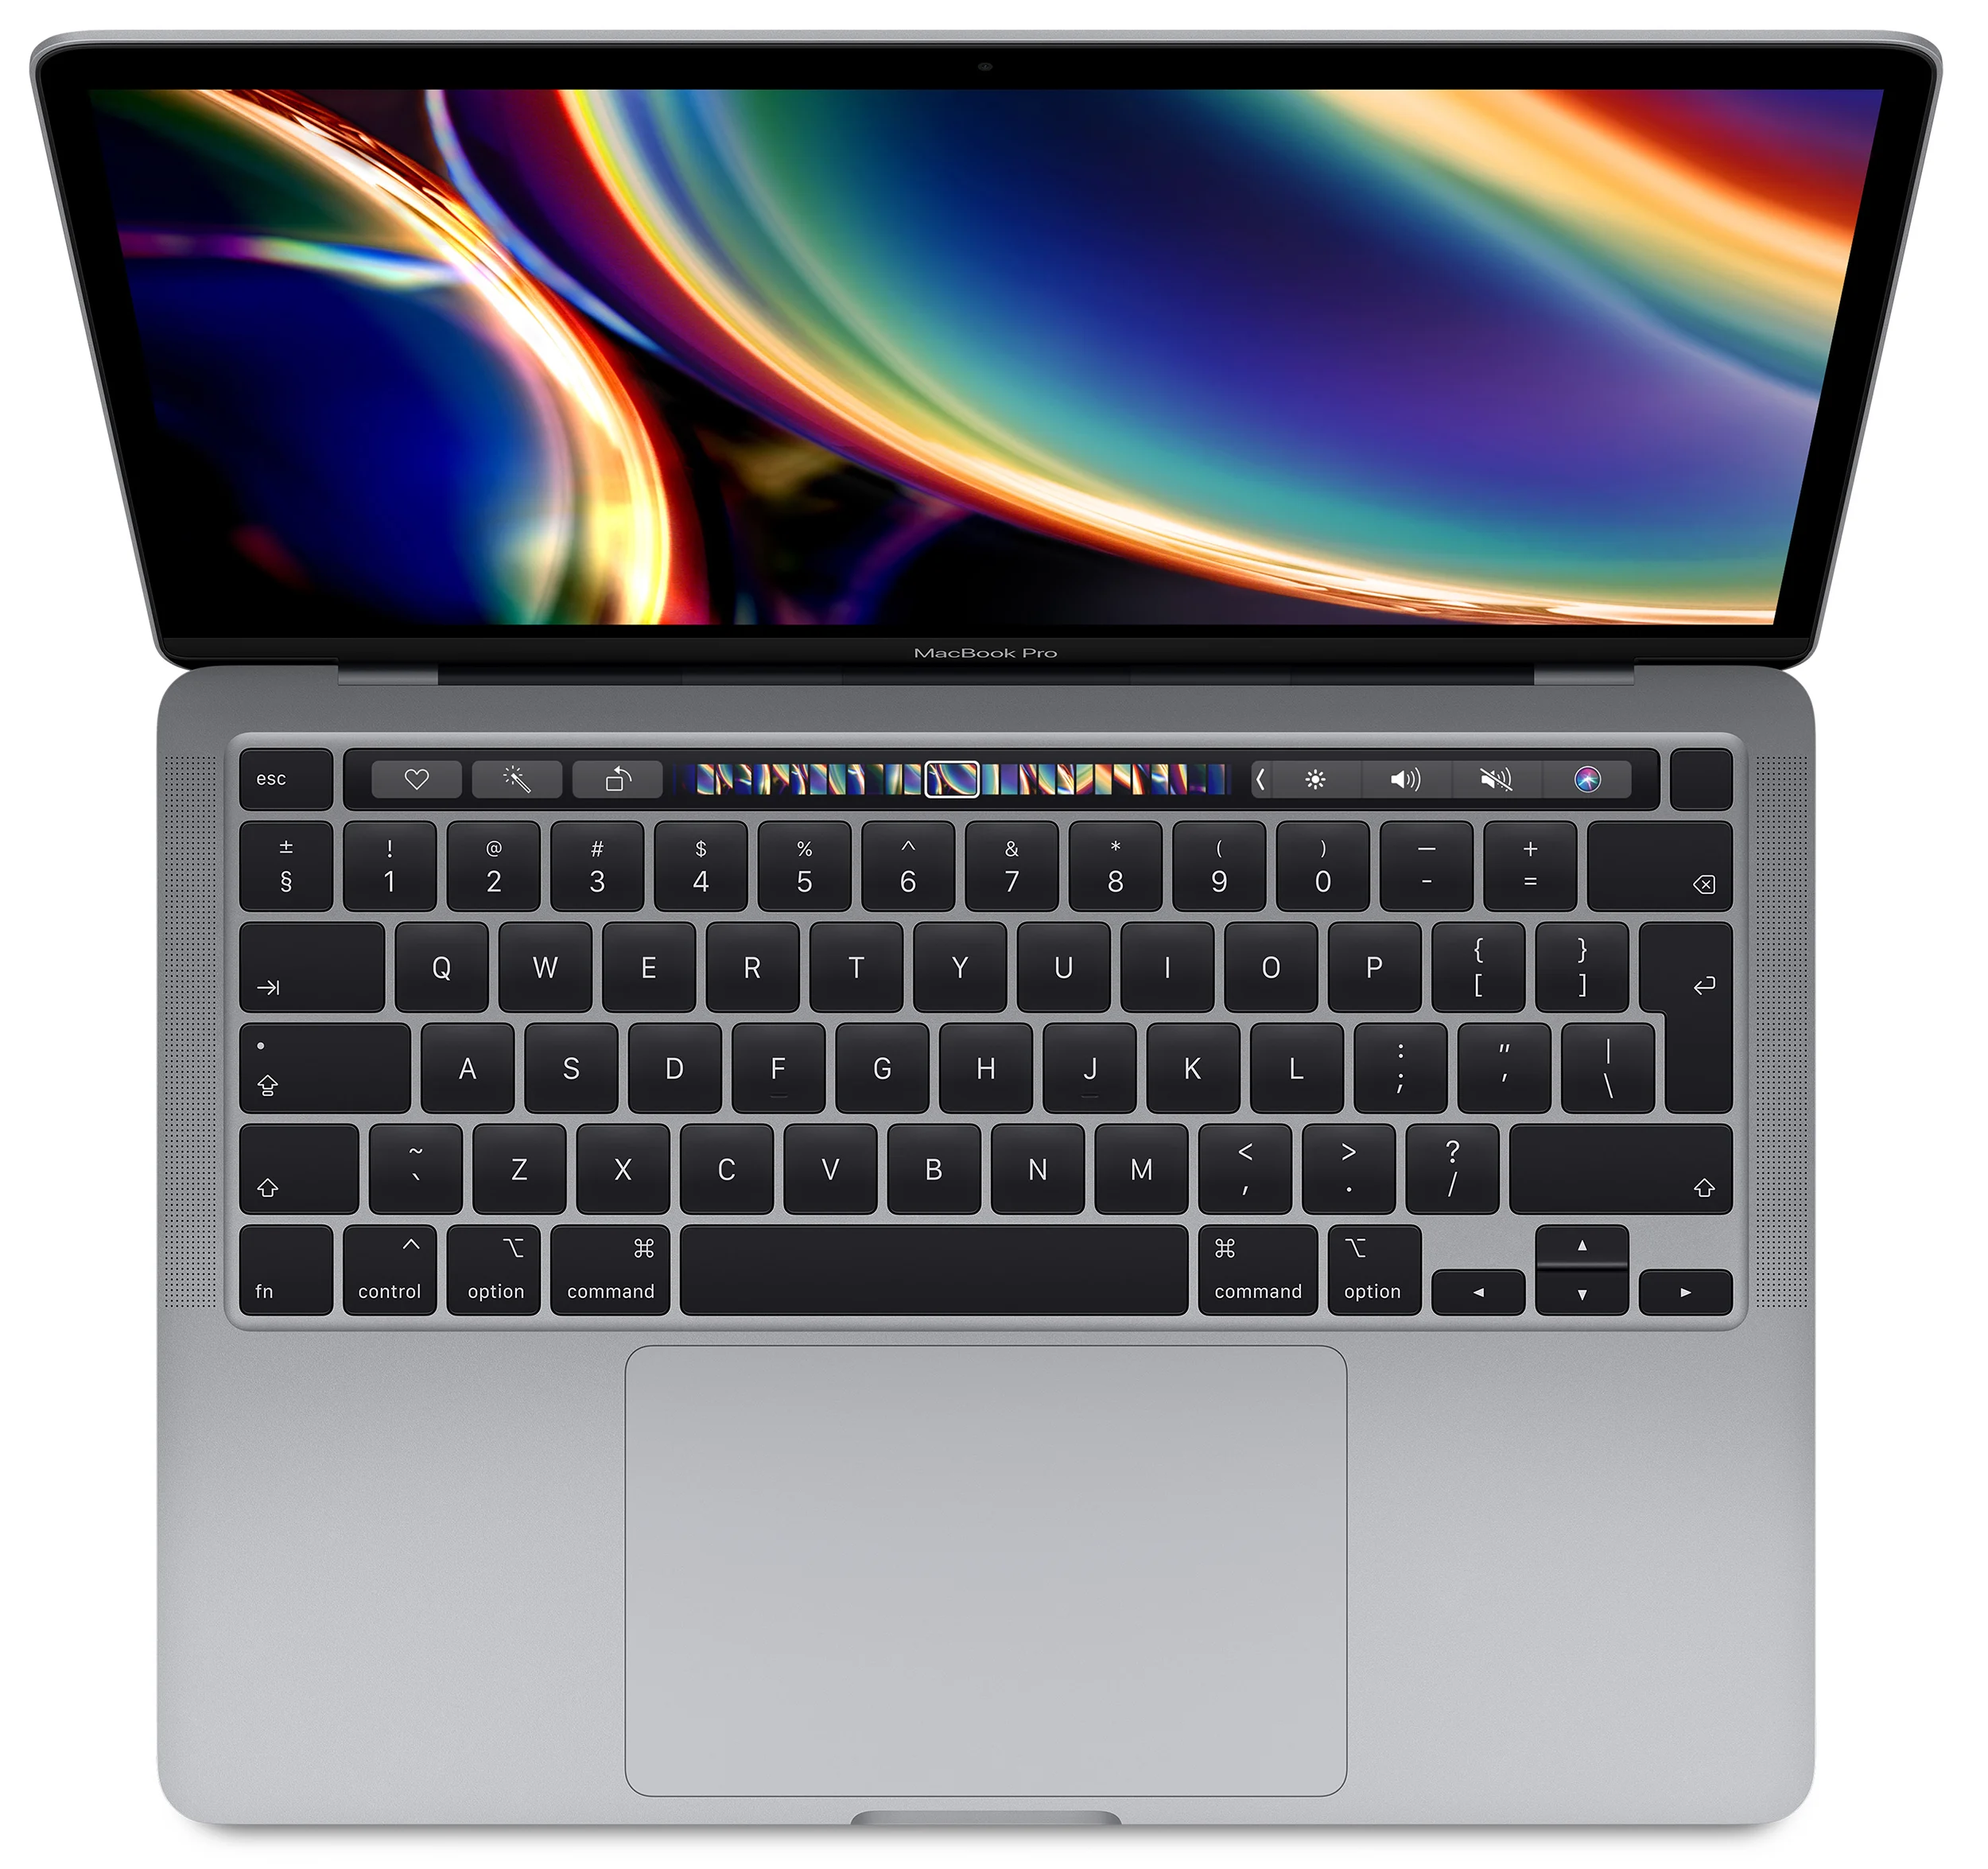 Ноутбук Apple MacBook Pro 13 ( Intel Core i5 8257U/8Gb/256Gb SSD/Intel Iris Plus Graphics 645/13,3"/2520x1080/Нет/Mac OS) Silver (Серебристый)